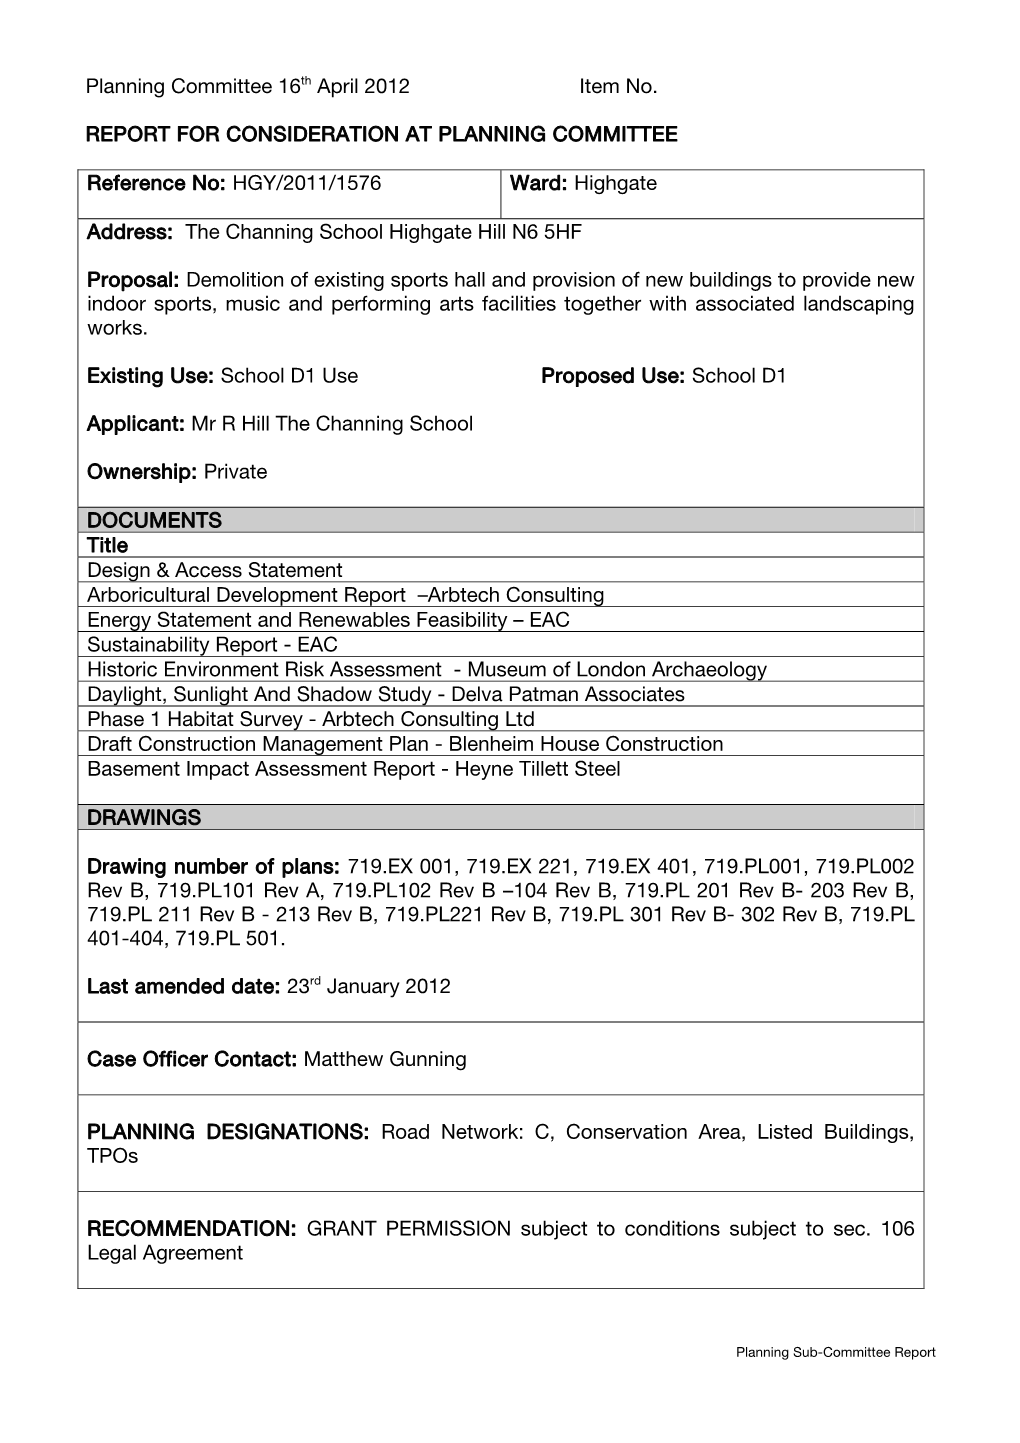 THE CHANNING SCHOOL, HIGHGATE HILL, LONDON, N6 5HF Application No HGY/2011/1577